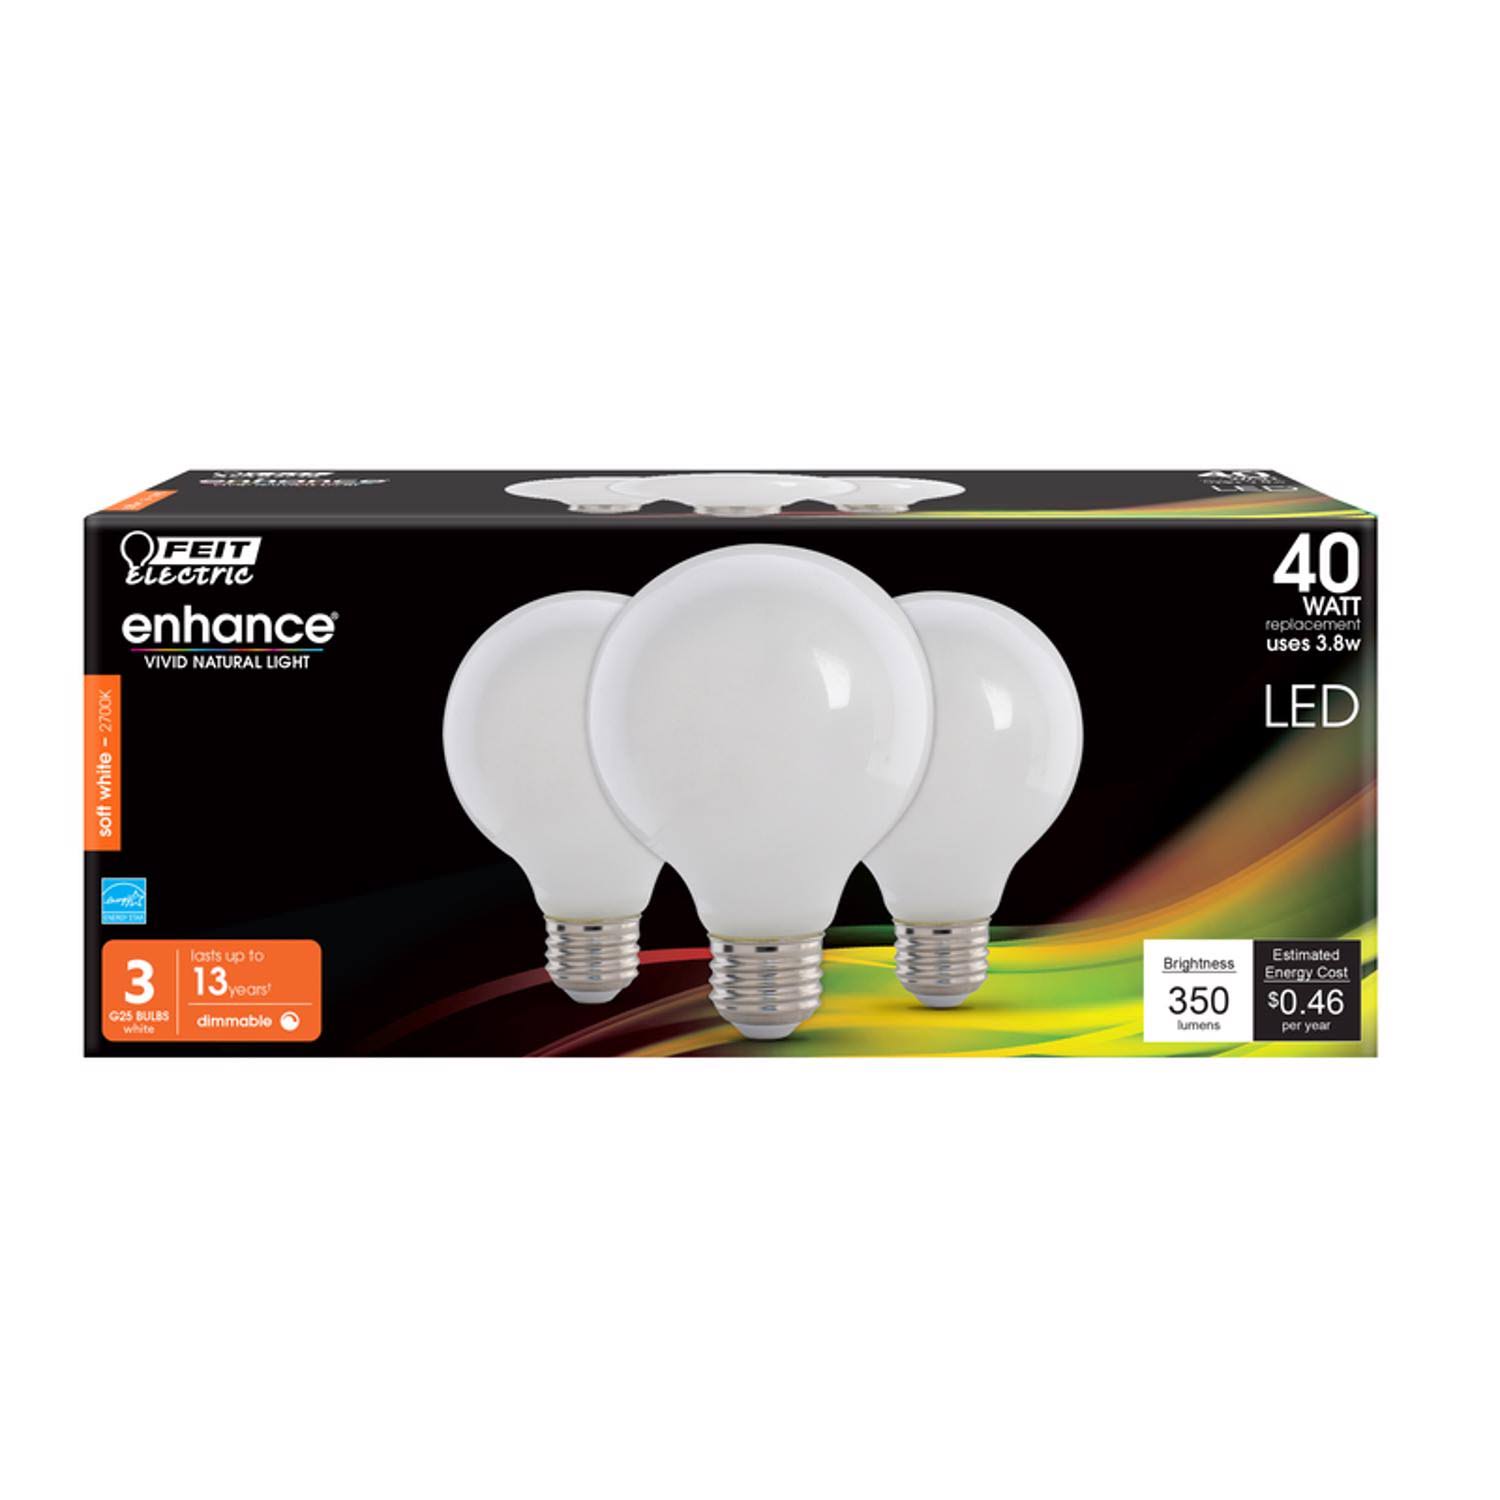 Feit Electric Enhance G25 Filament LED Bulbs - 3.8W, Soft White